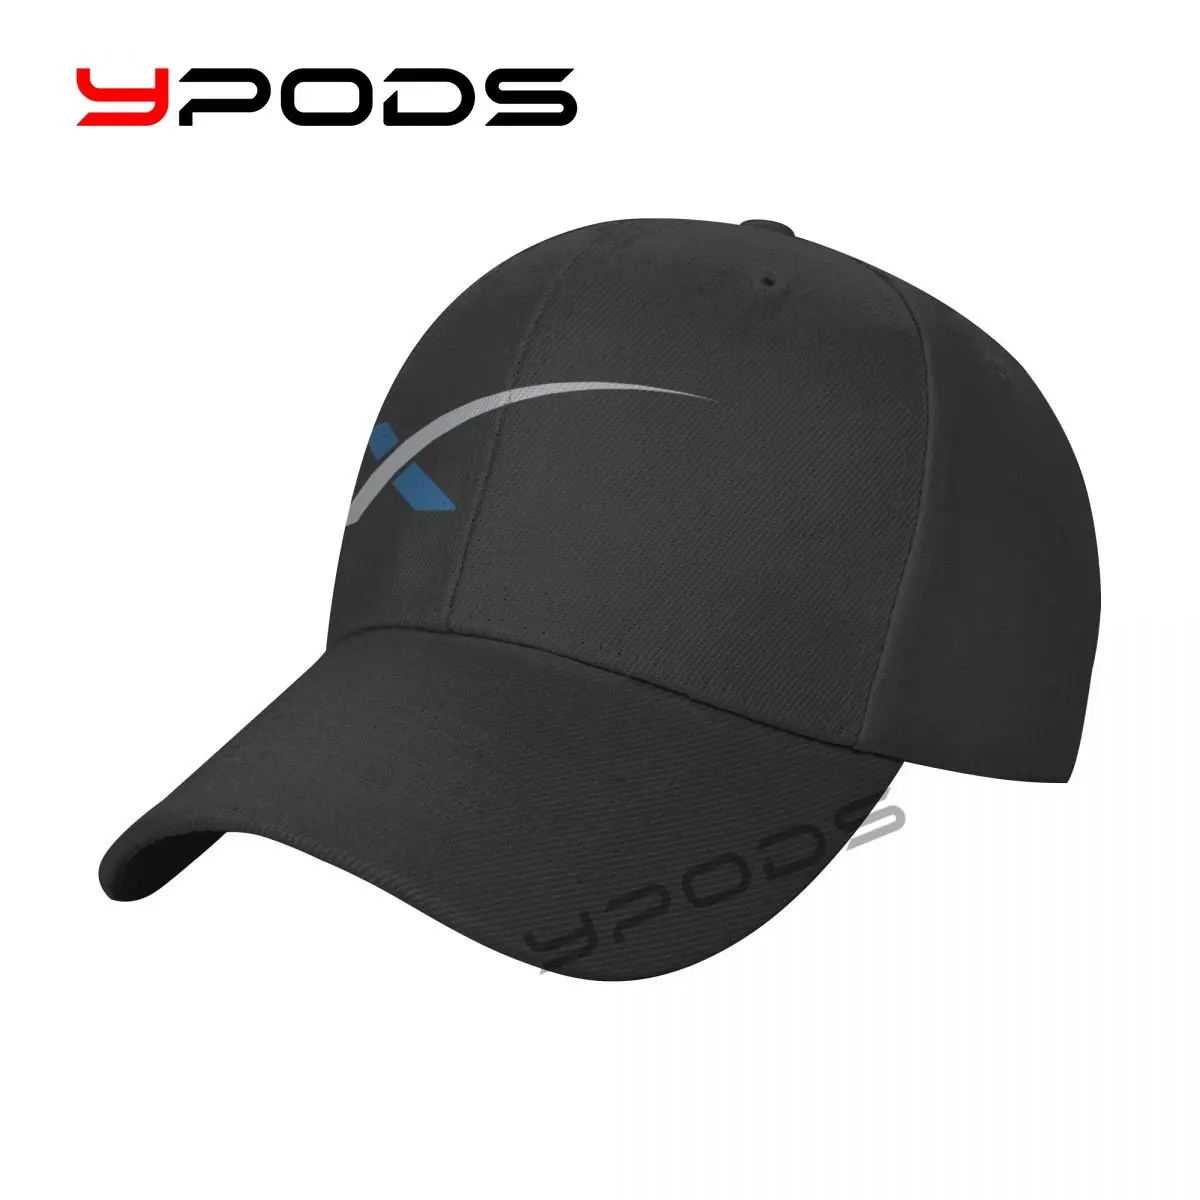 

printing Baseball Cap U839d2c2cd39340f2bdfc5c312c04c543g Adorable Sun Caps Fishing Hat for Men Women Unisex Snapback Flat Bill